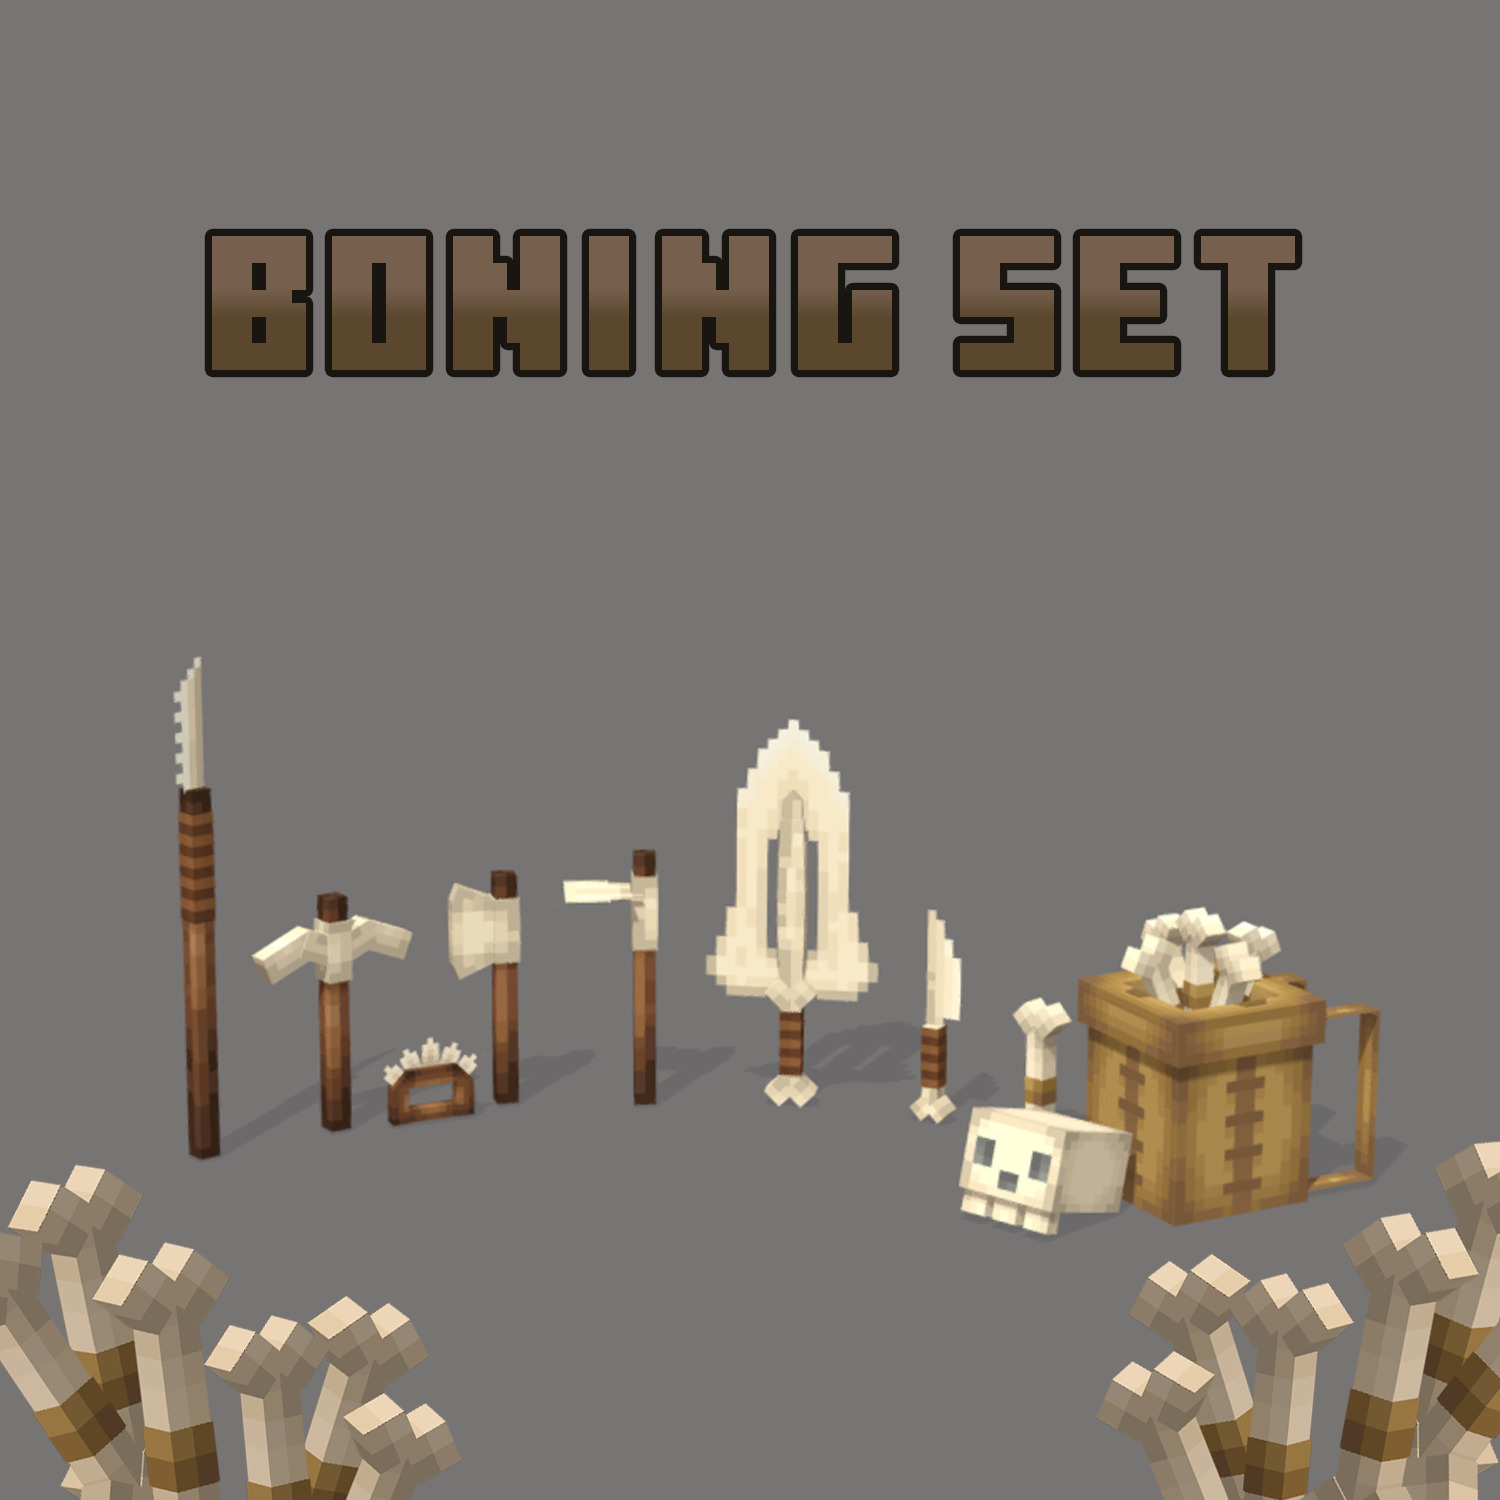 Boning-Weapon-Set-Cover.jpg